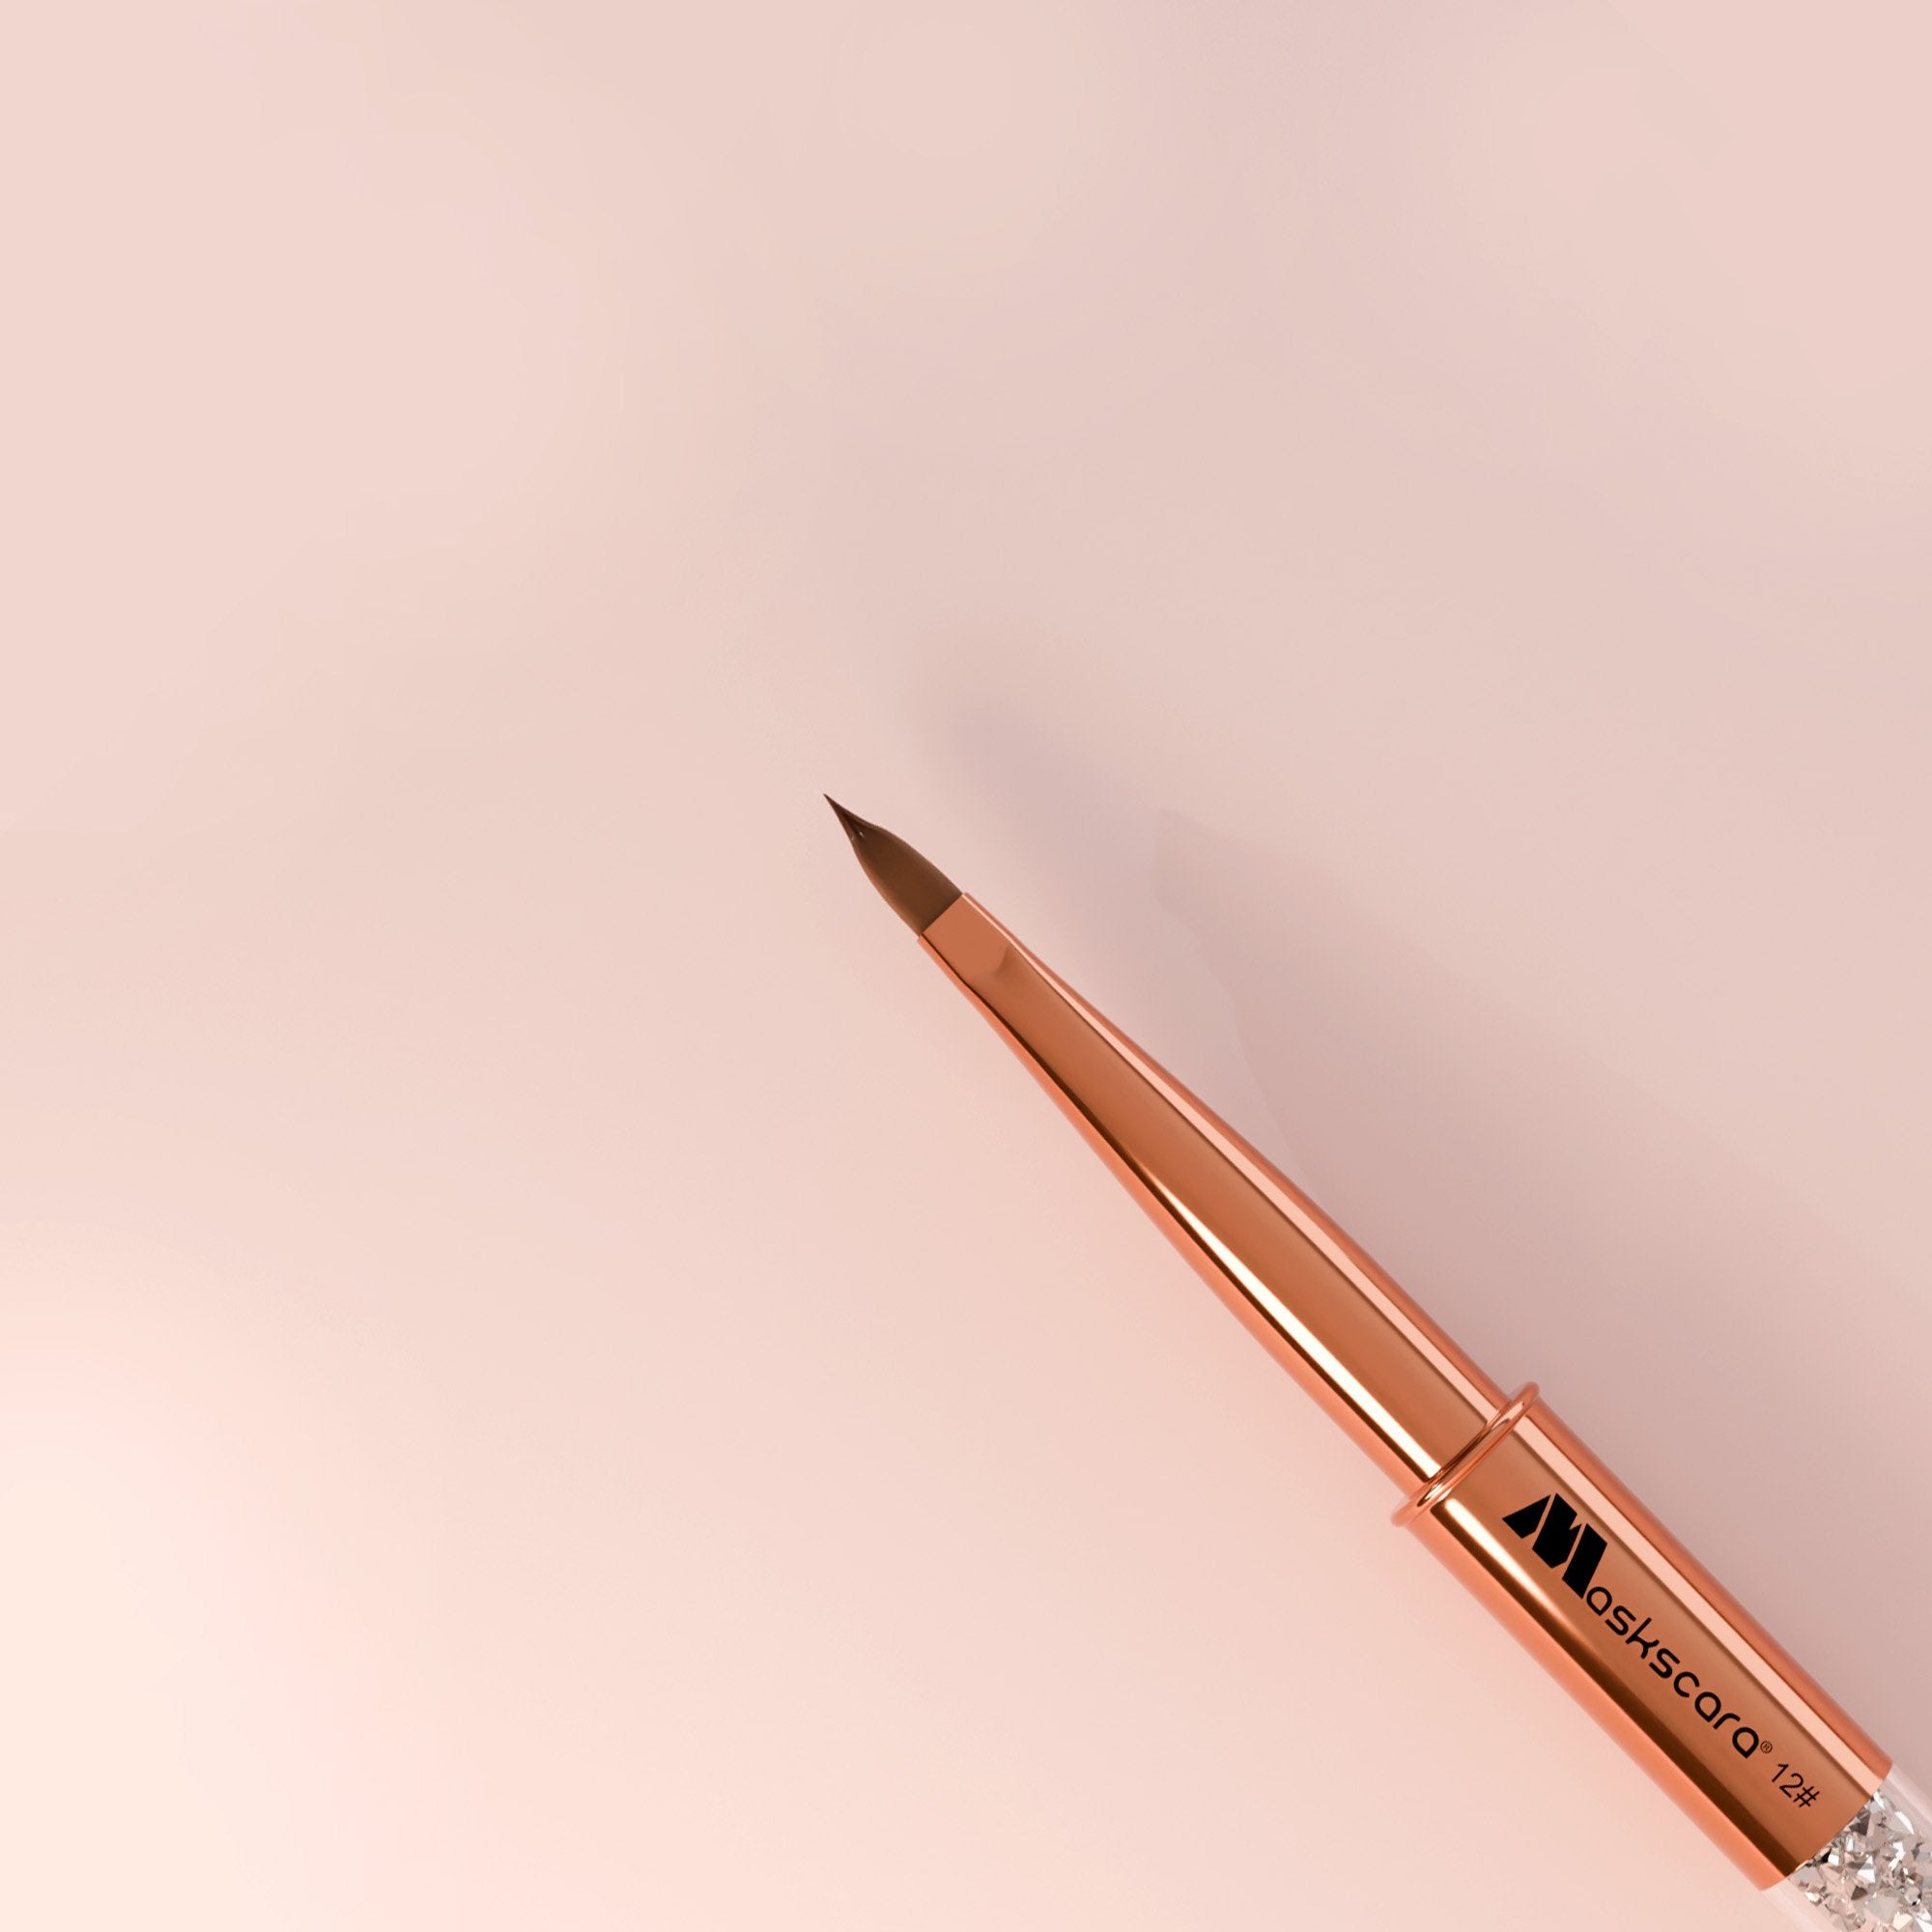 <img scr = “Maskscara Rose Gold 3D Art Brush.jpg” alt = “Rose Gold 3D nail art brush by the brand Maskscara”>